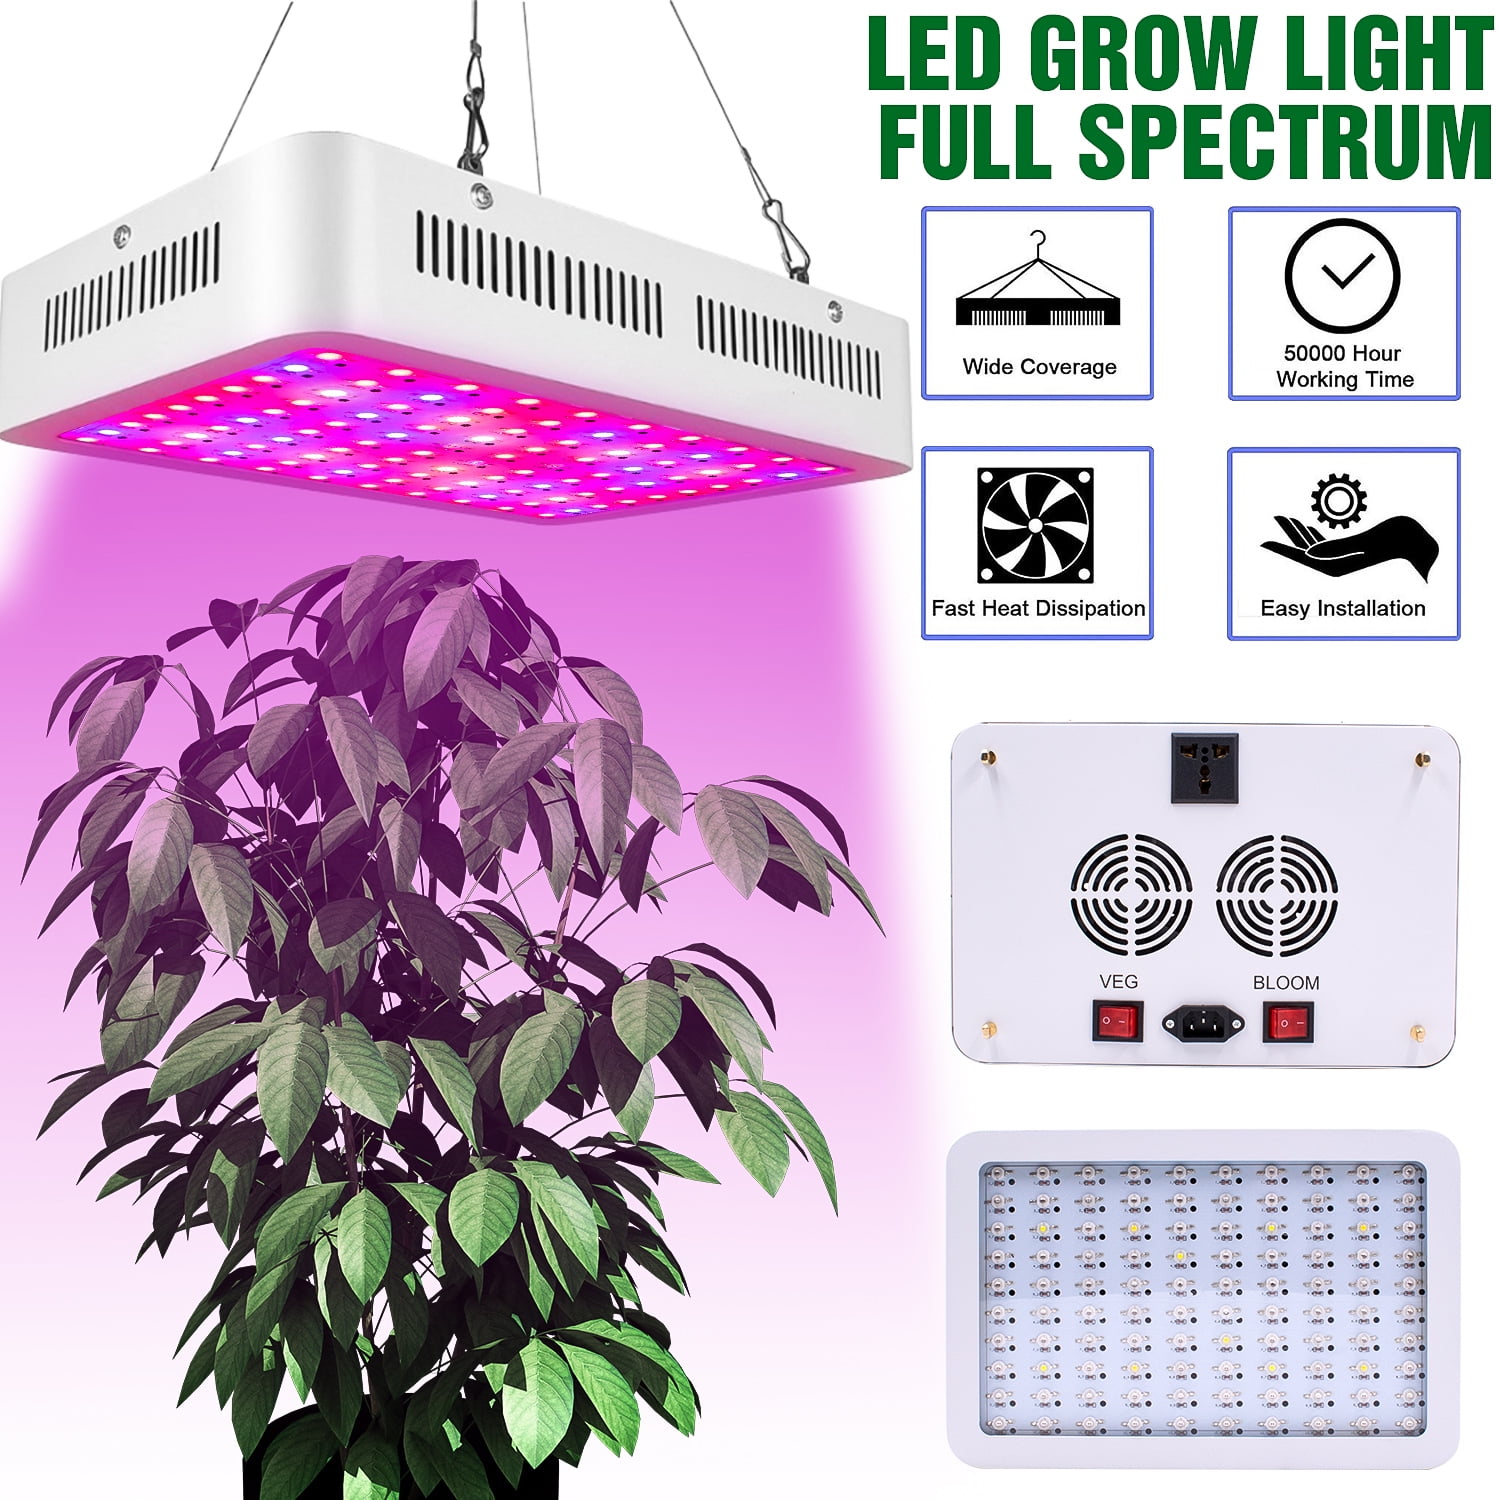 600W LED Grow Light Full Spectrum Spectrum For Indoor Plant Growing Light